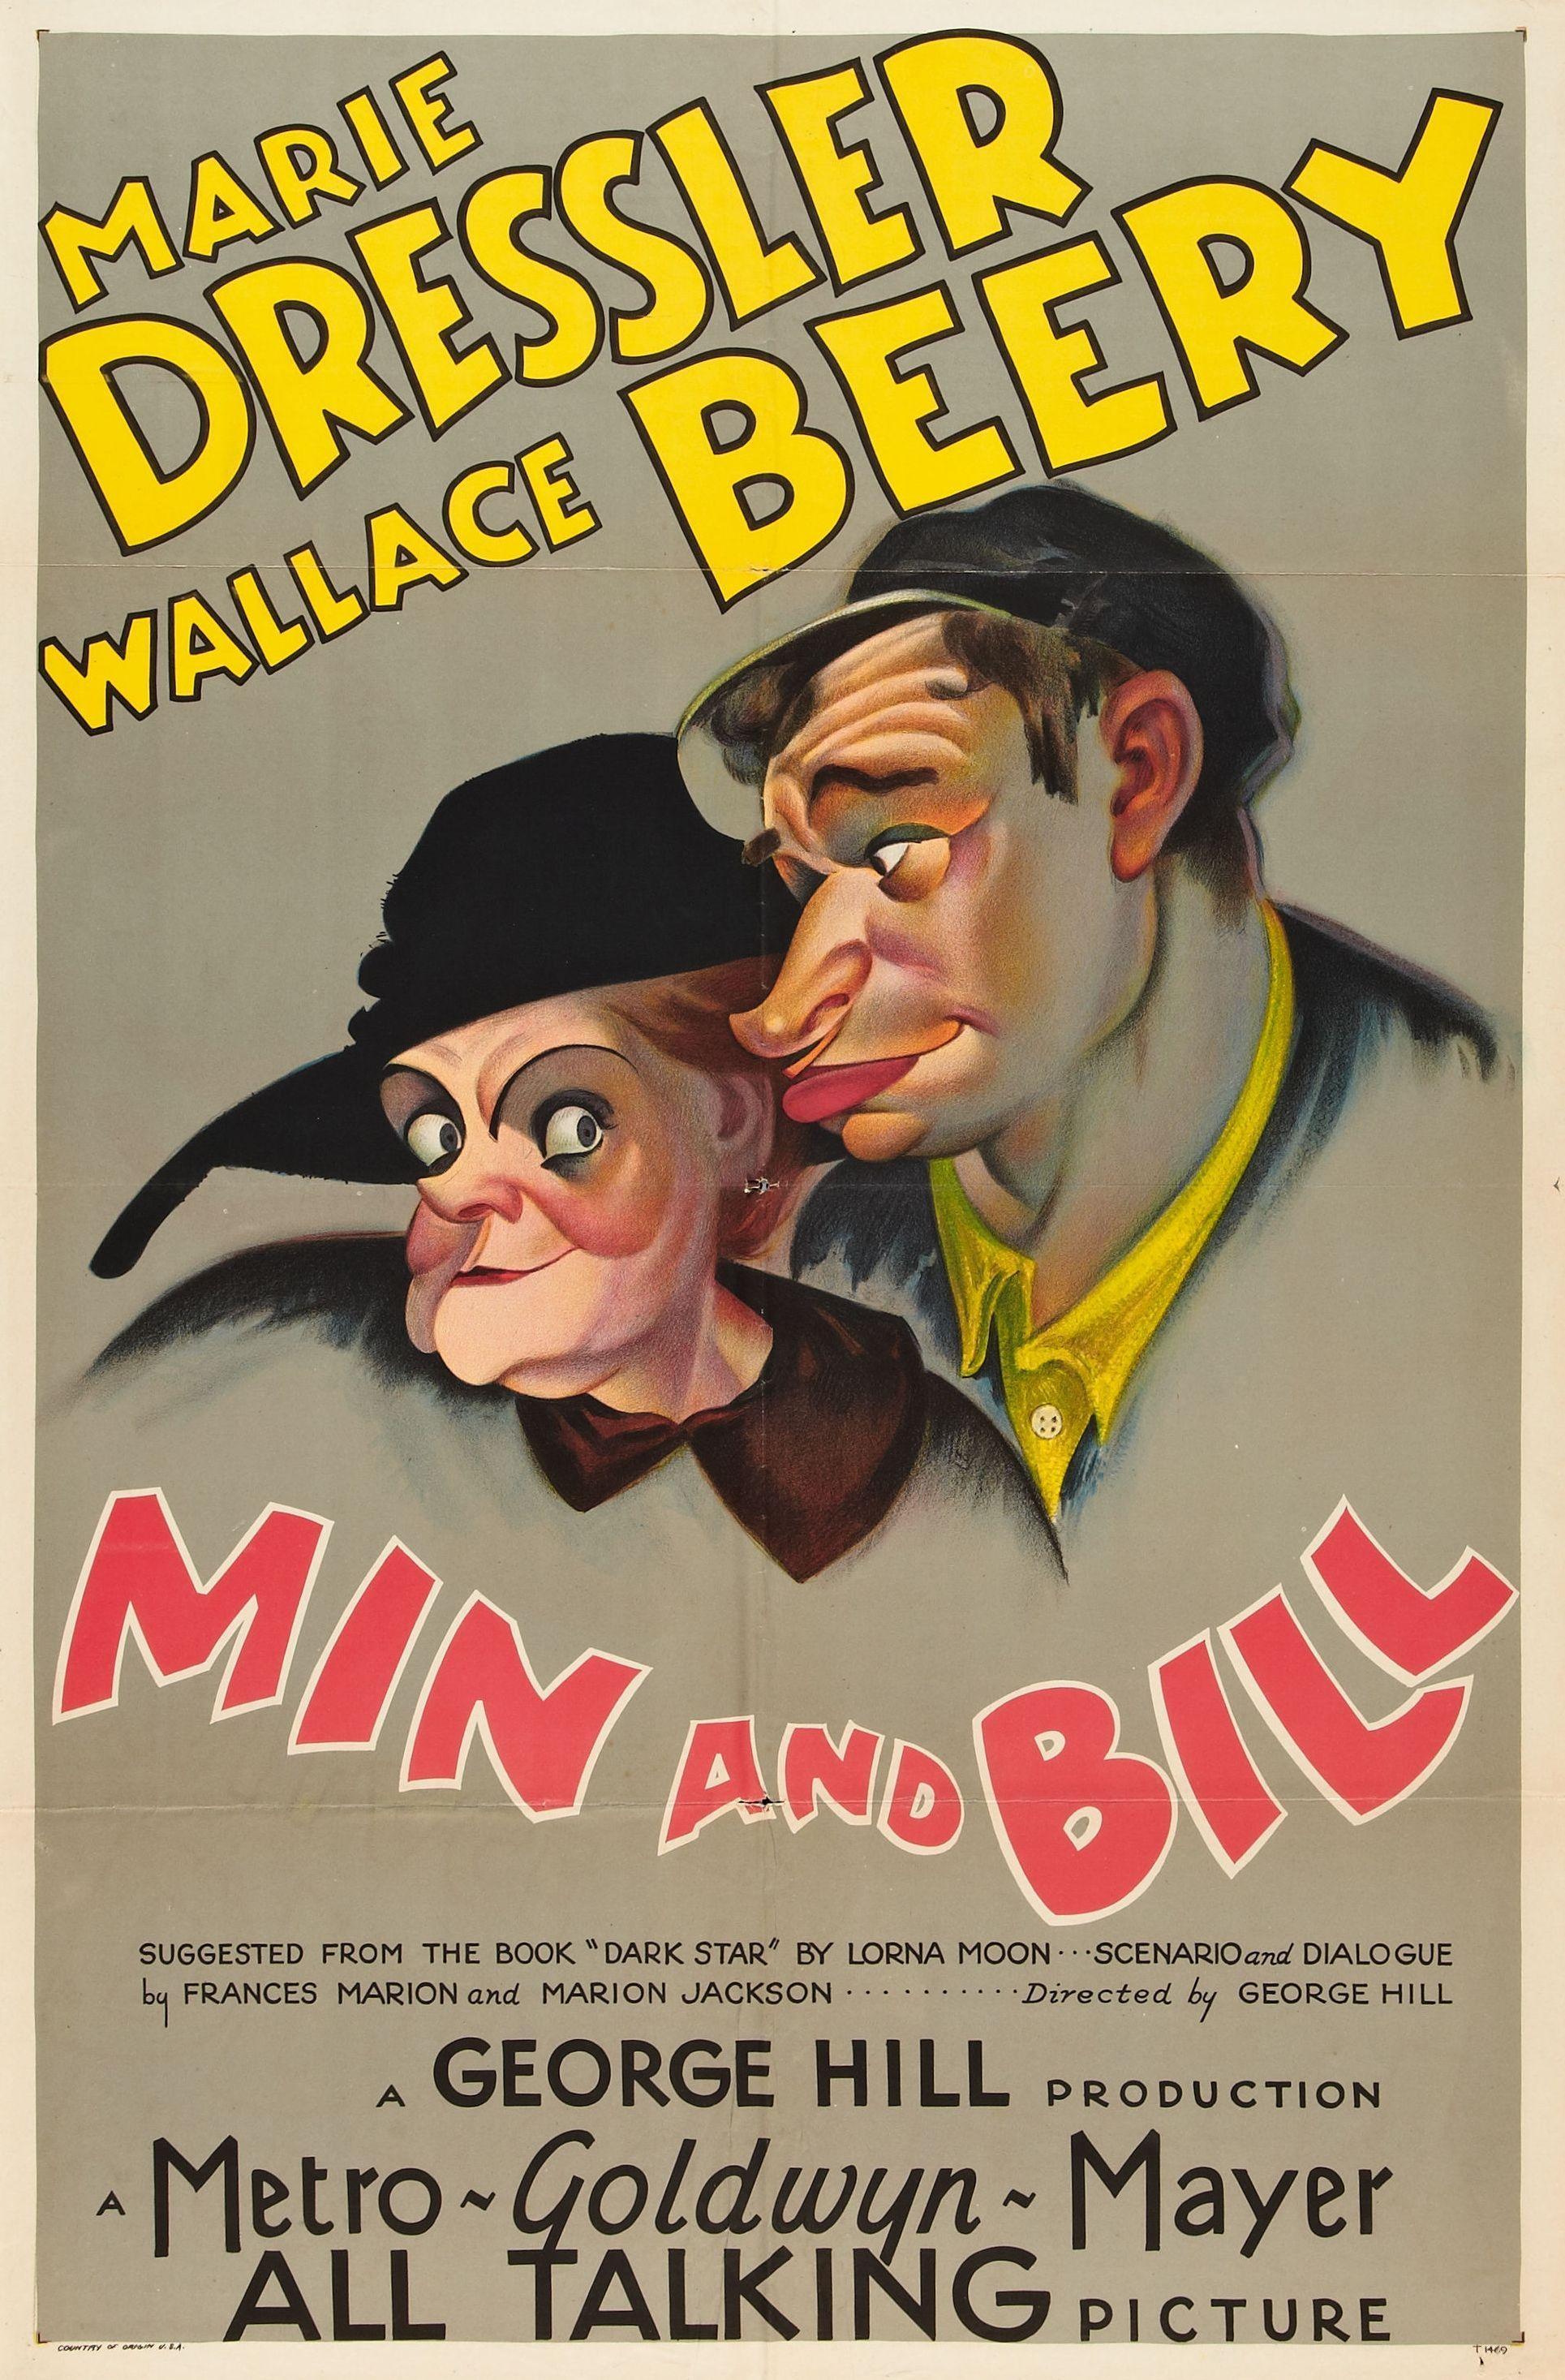 Постер фильма Min and Bill